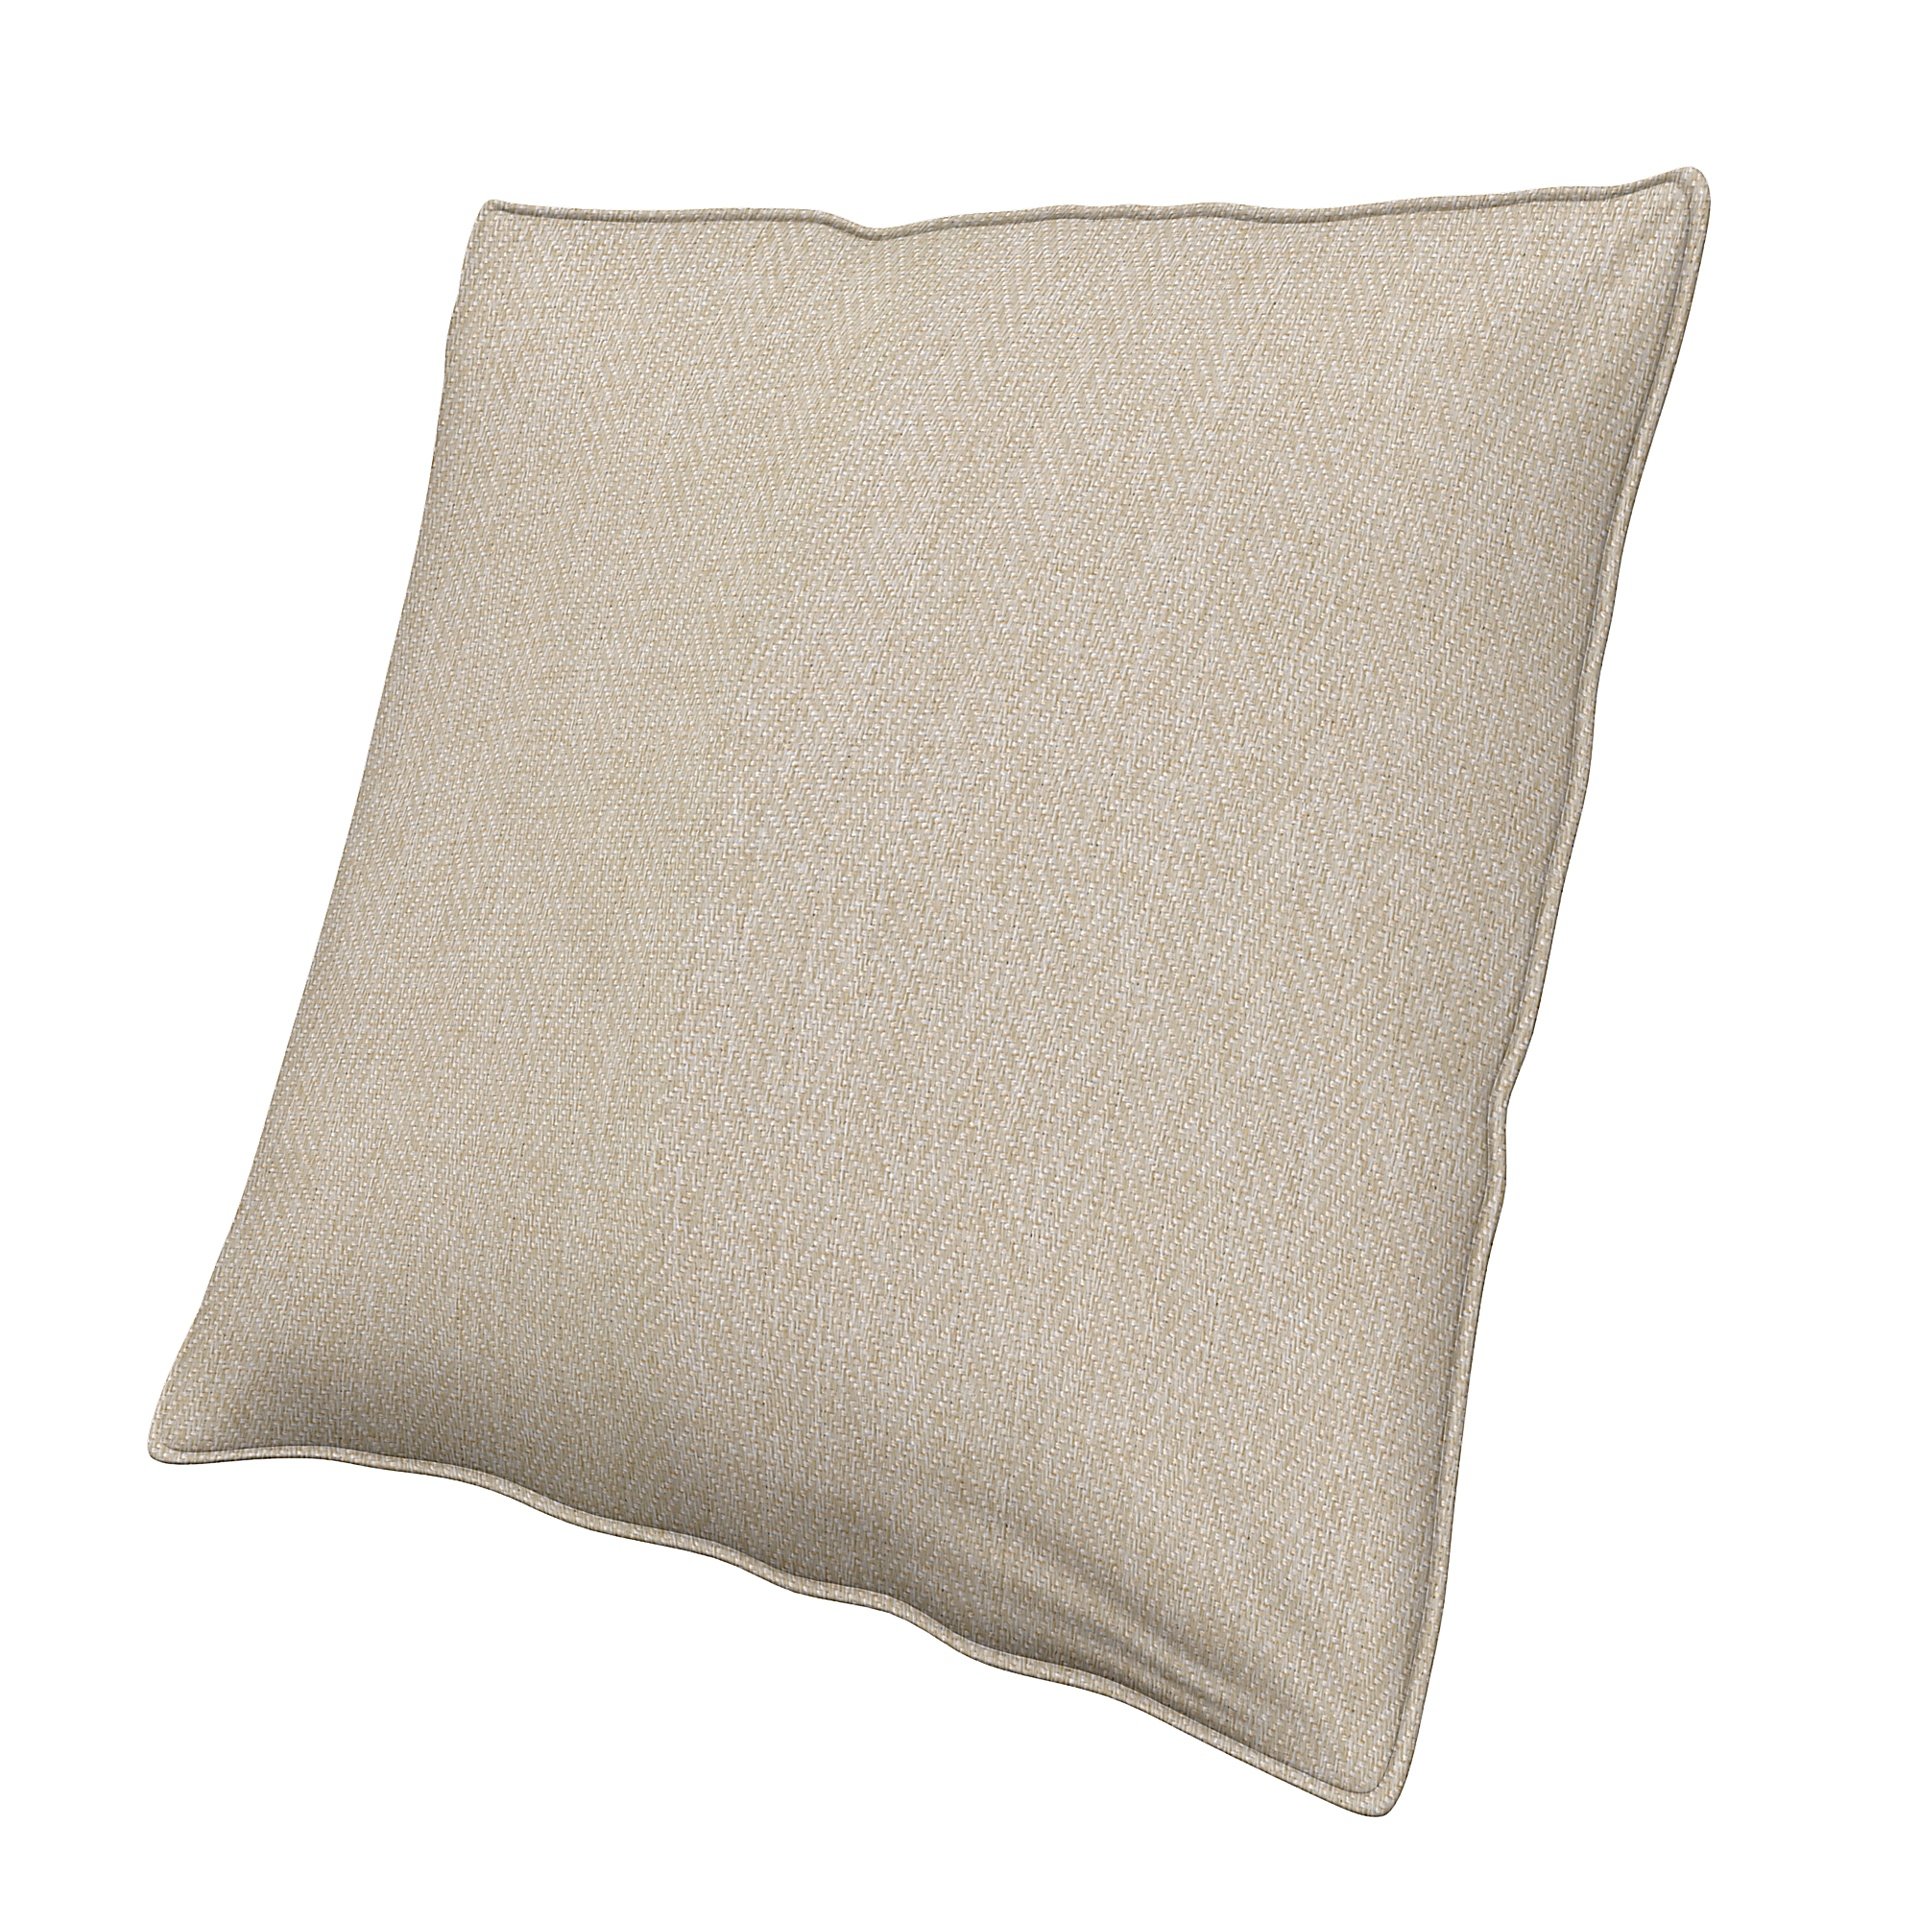 Cushion cover, Natural, Boucle & Texture - Bemz